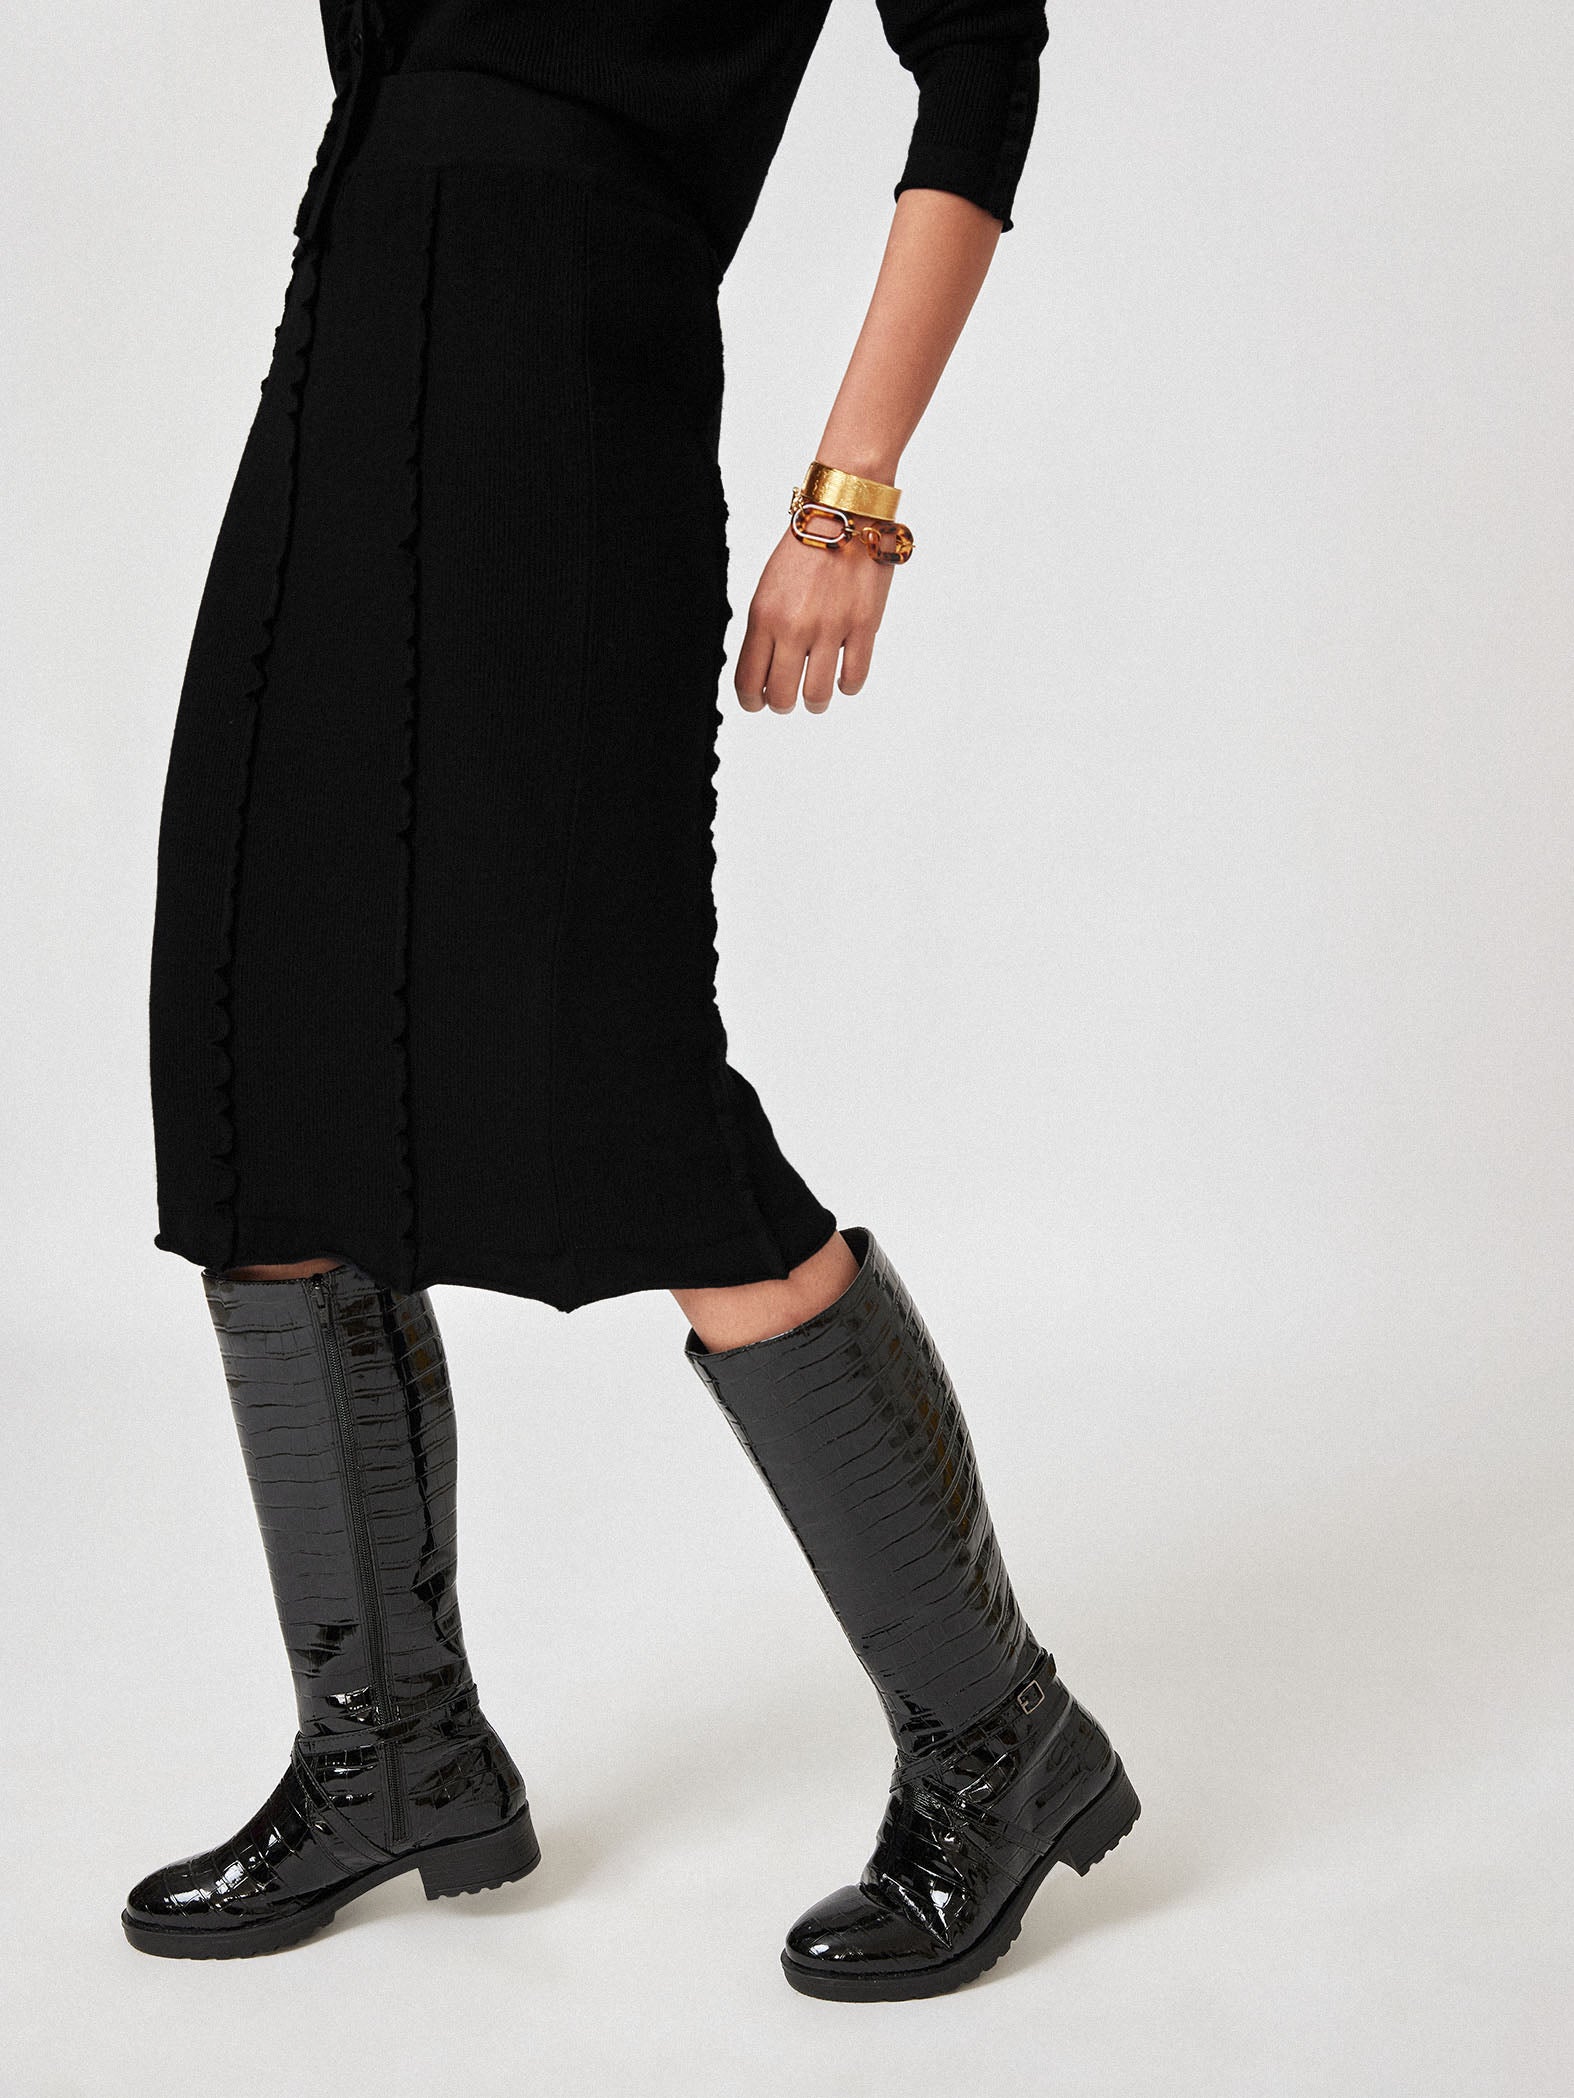 Black Knit Ruffle Midi Skirt